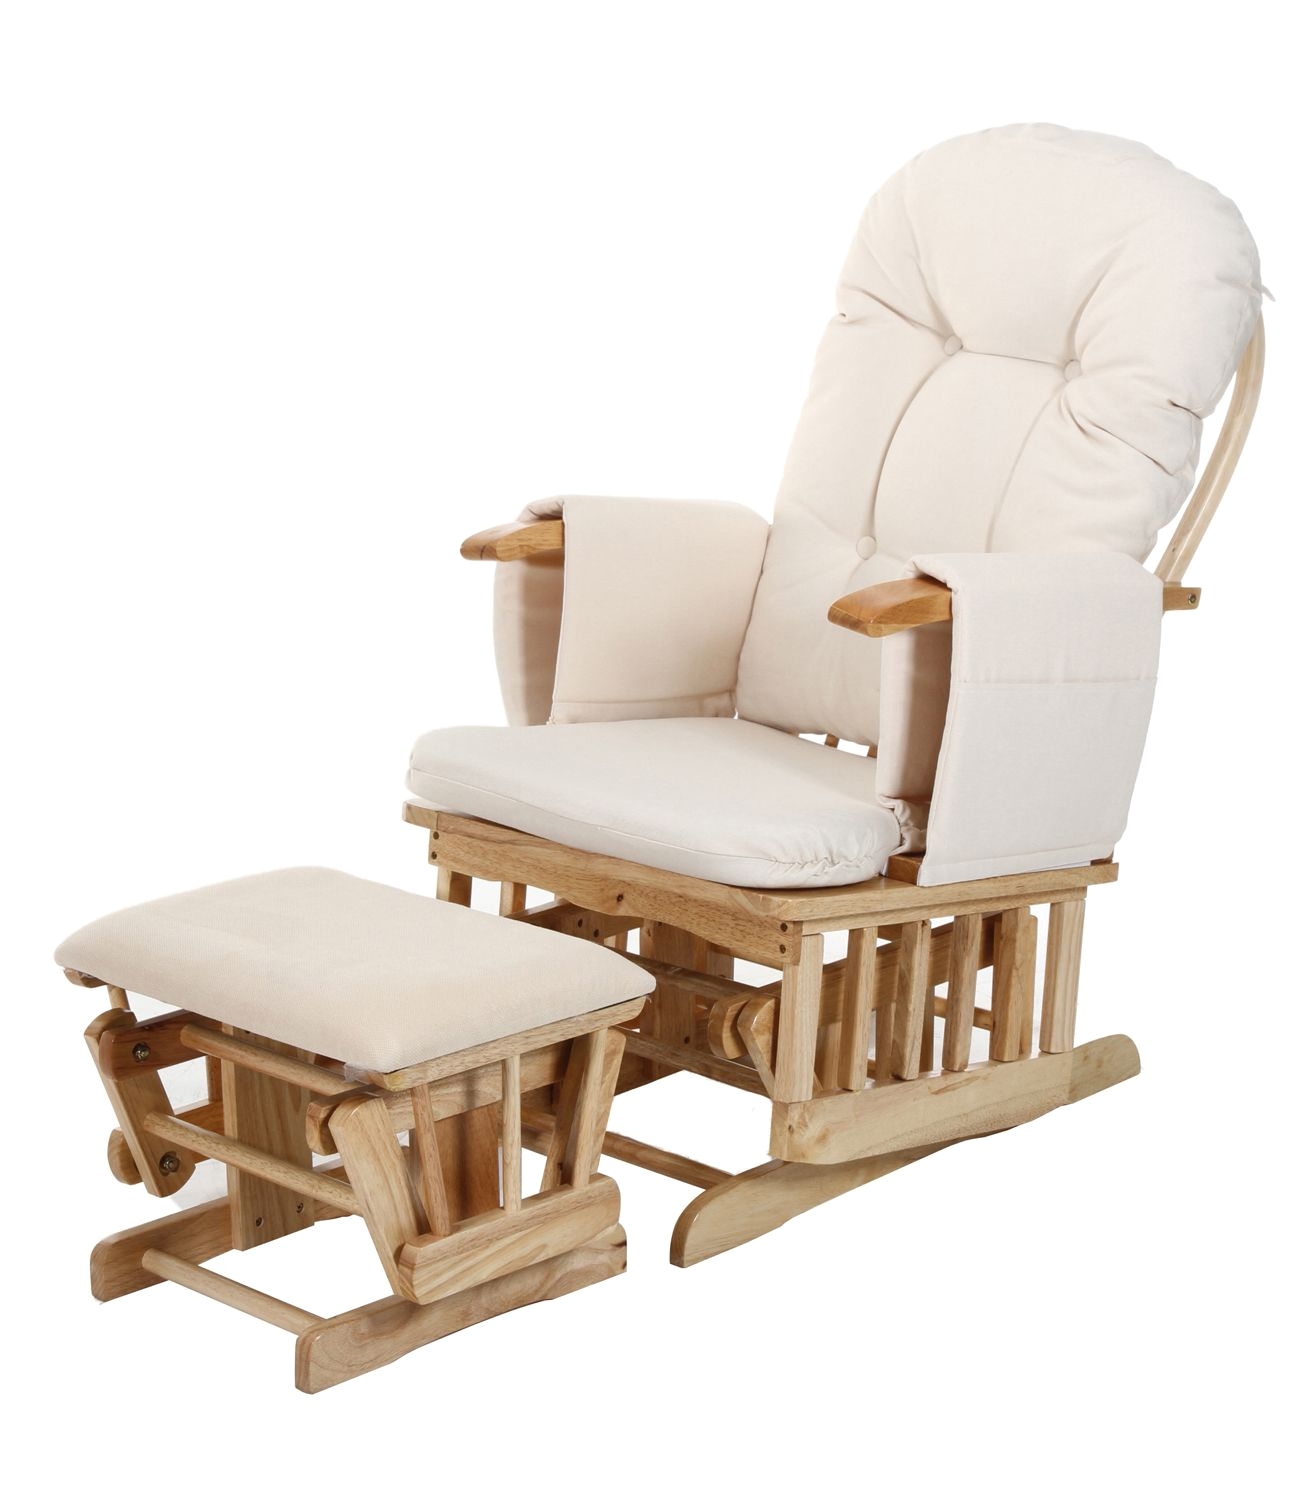 Babies R Us Nursing Chair Uk Buy Your Baby Weavers Recline Glider Stool From Kiddicare Nursing